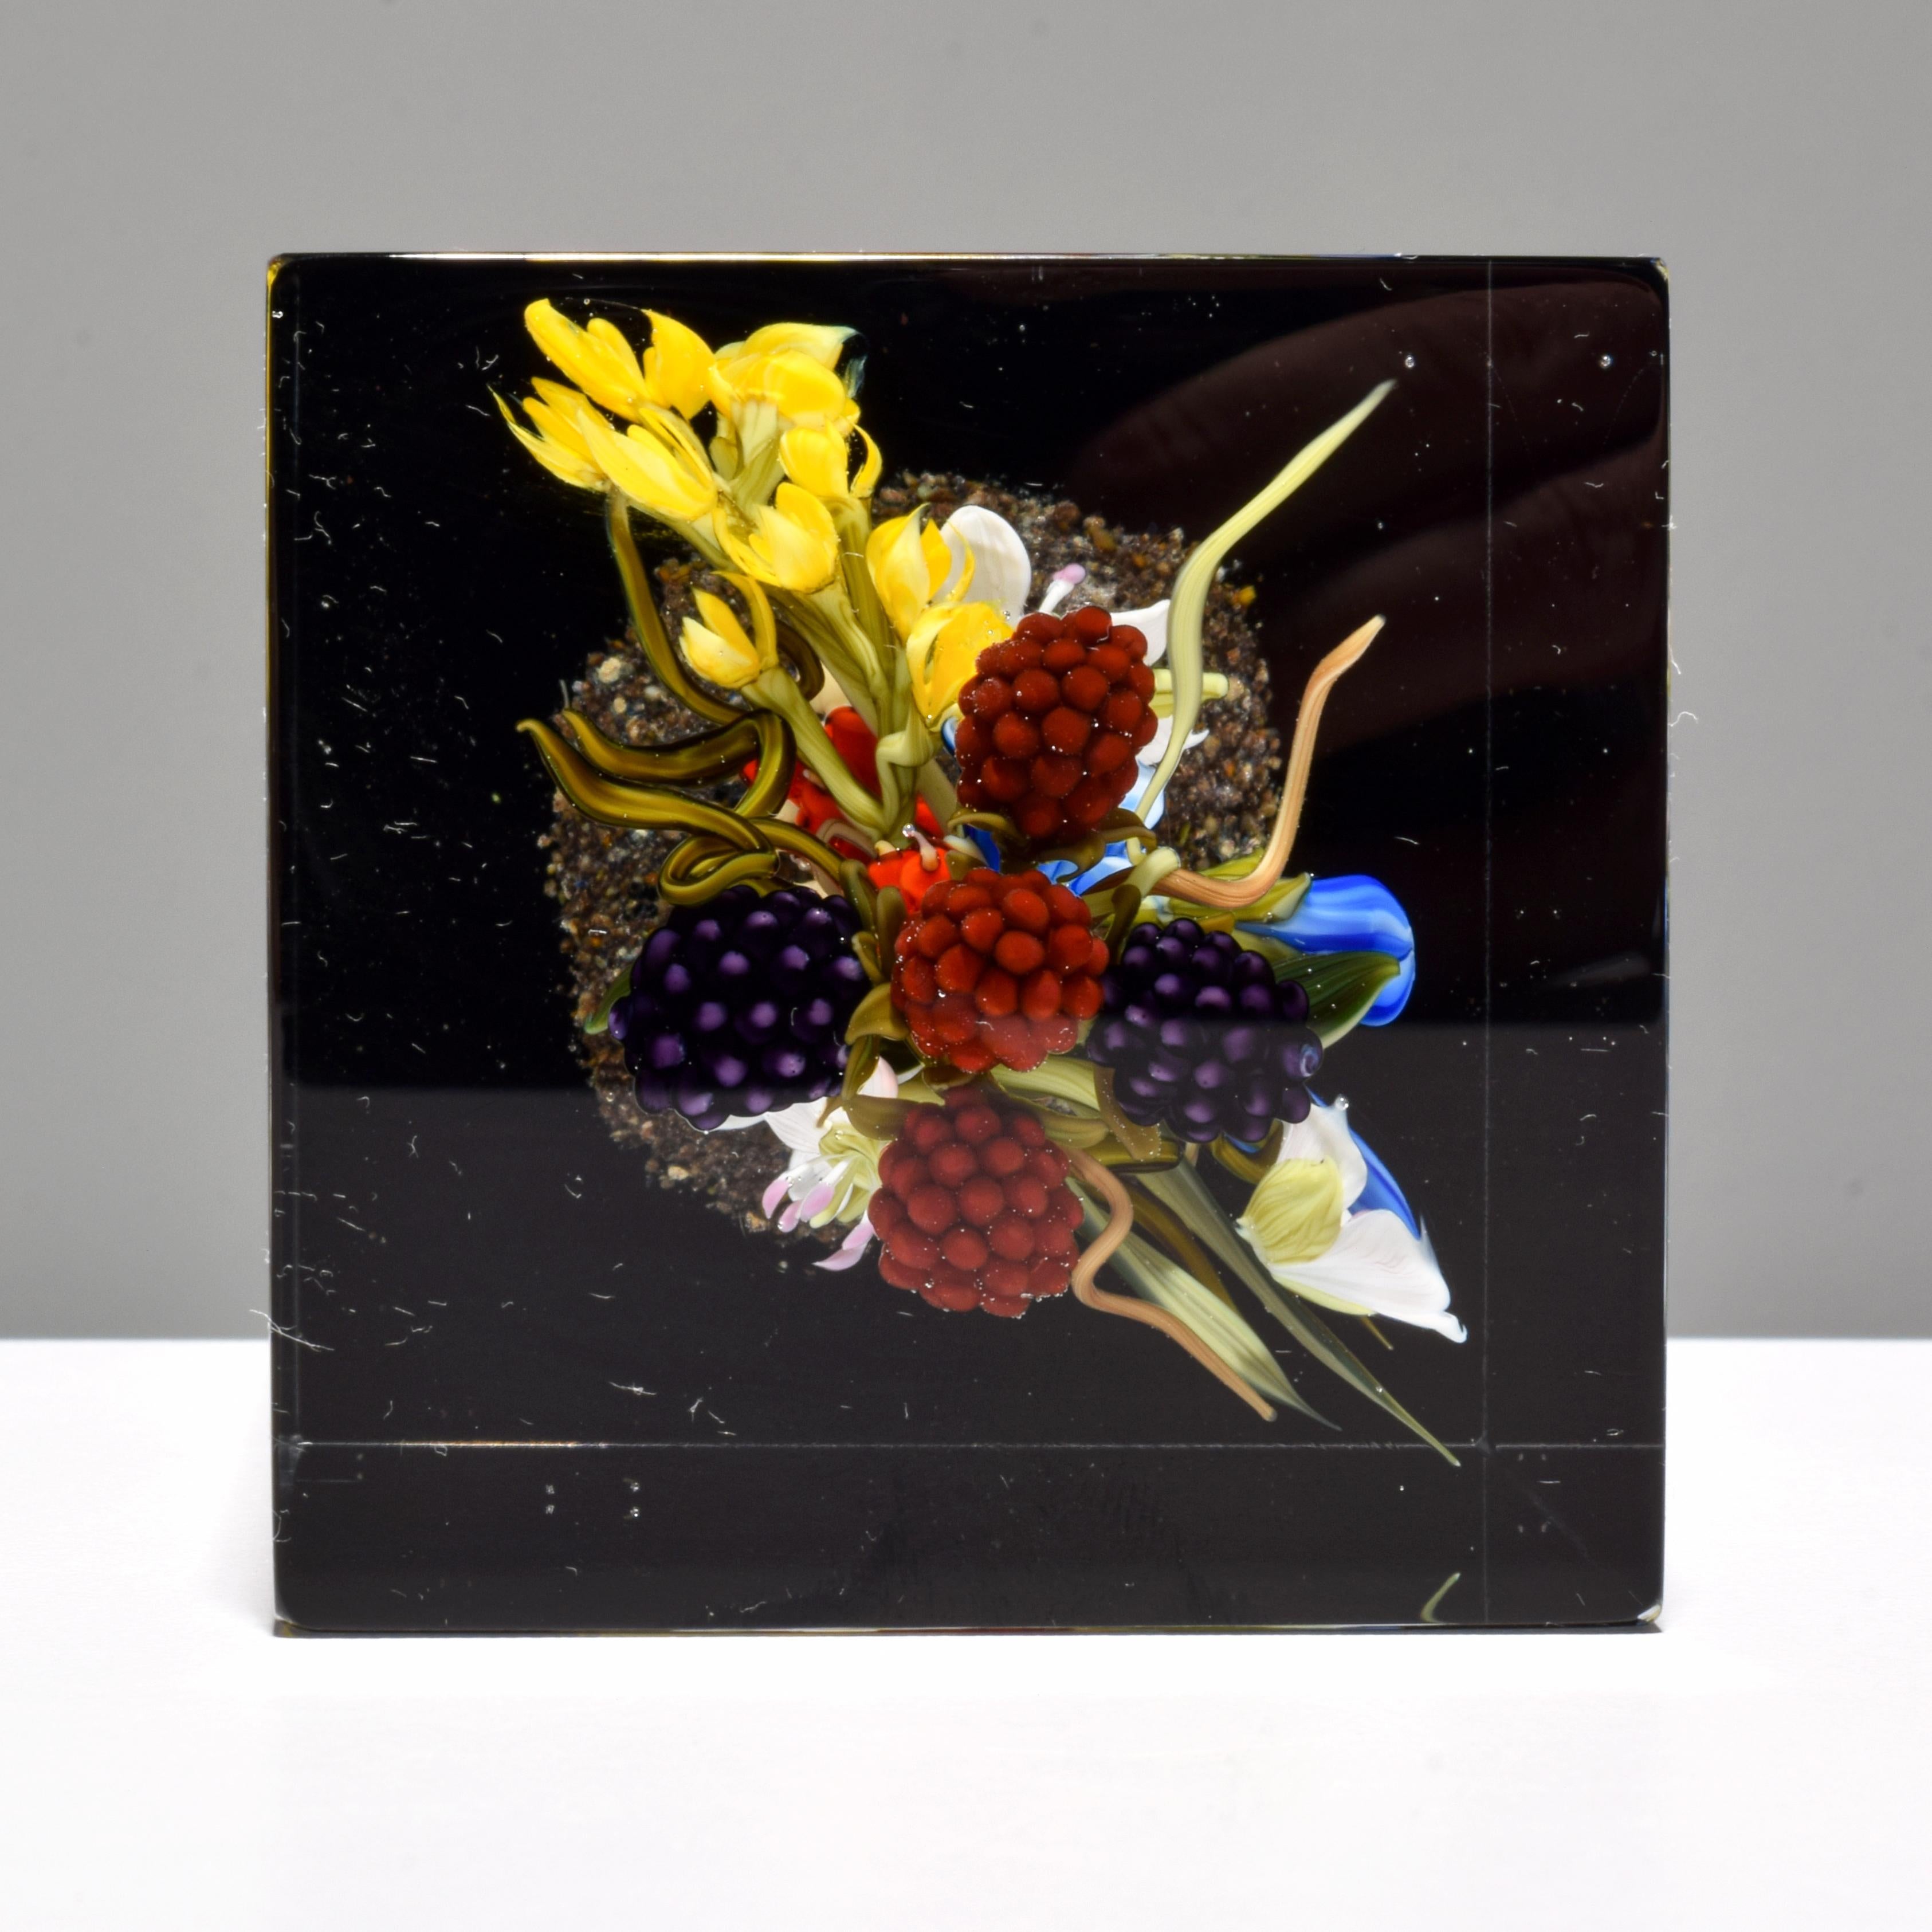 Paul J. Stankard Upright Raspberries, Flowers & Root People Paperweight For Sale 3